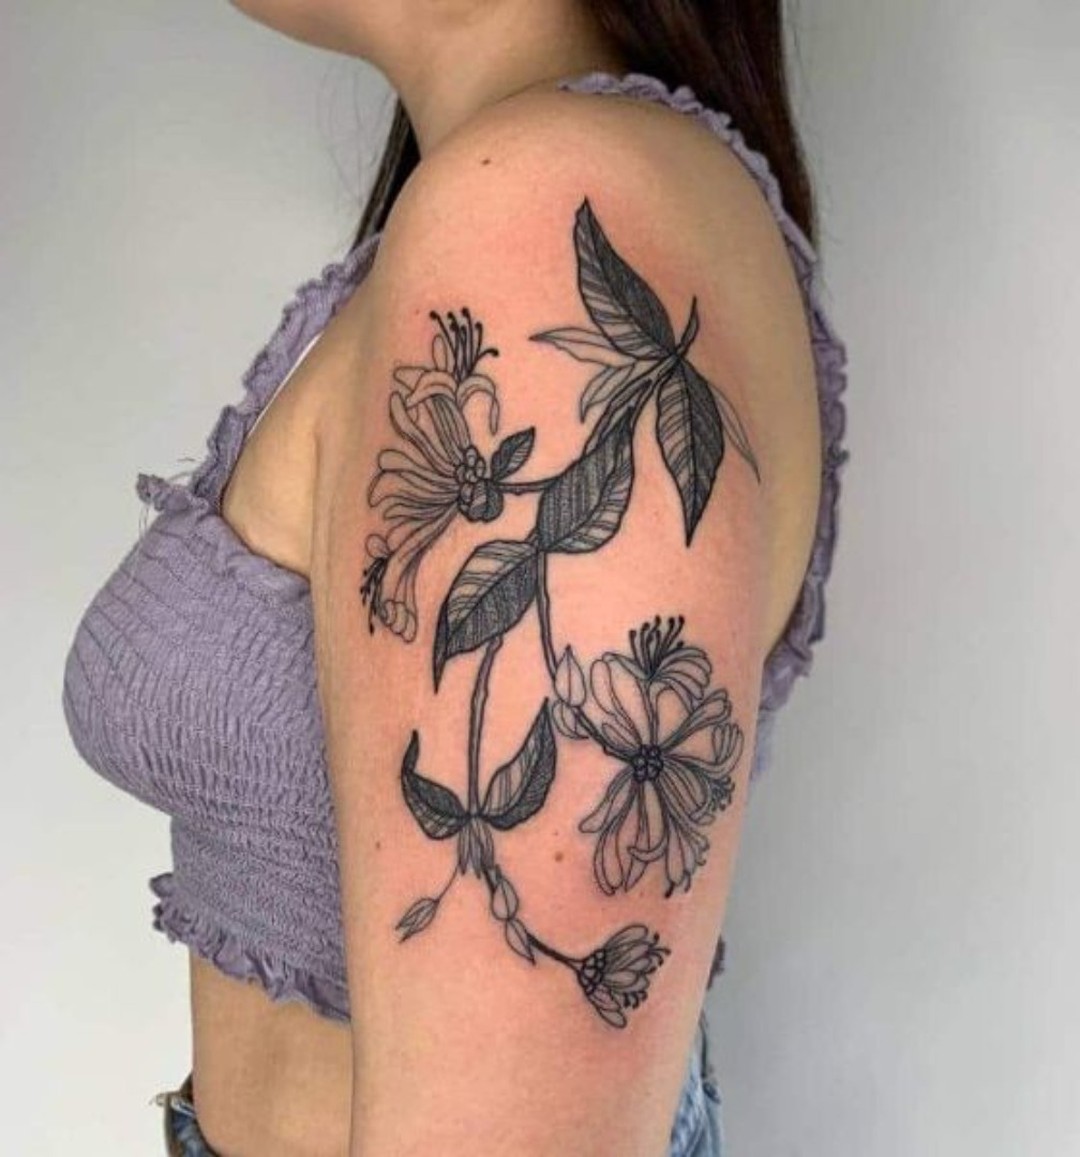 Honeysuckle Birth Flower Classy Shoulder Tattoos Female